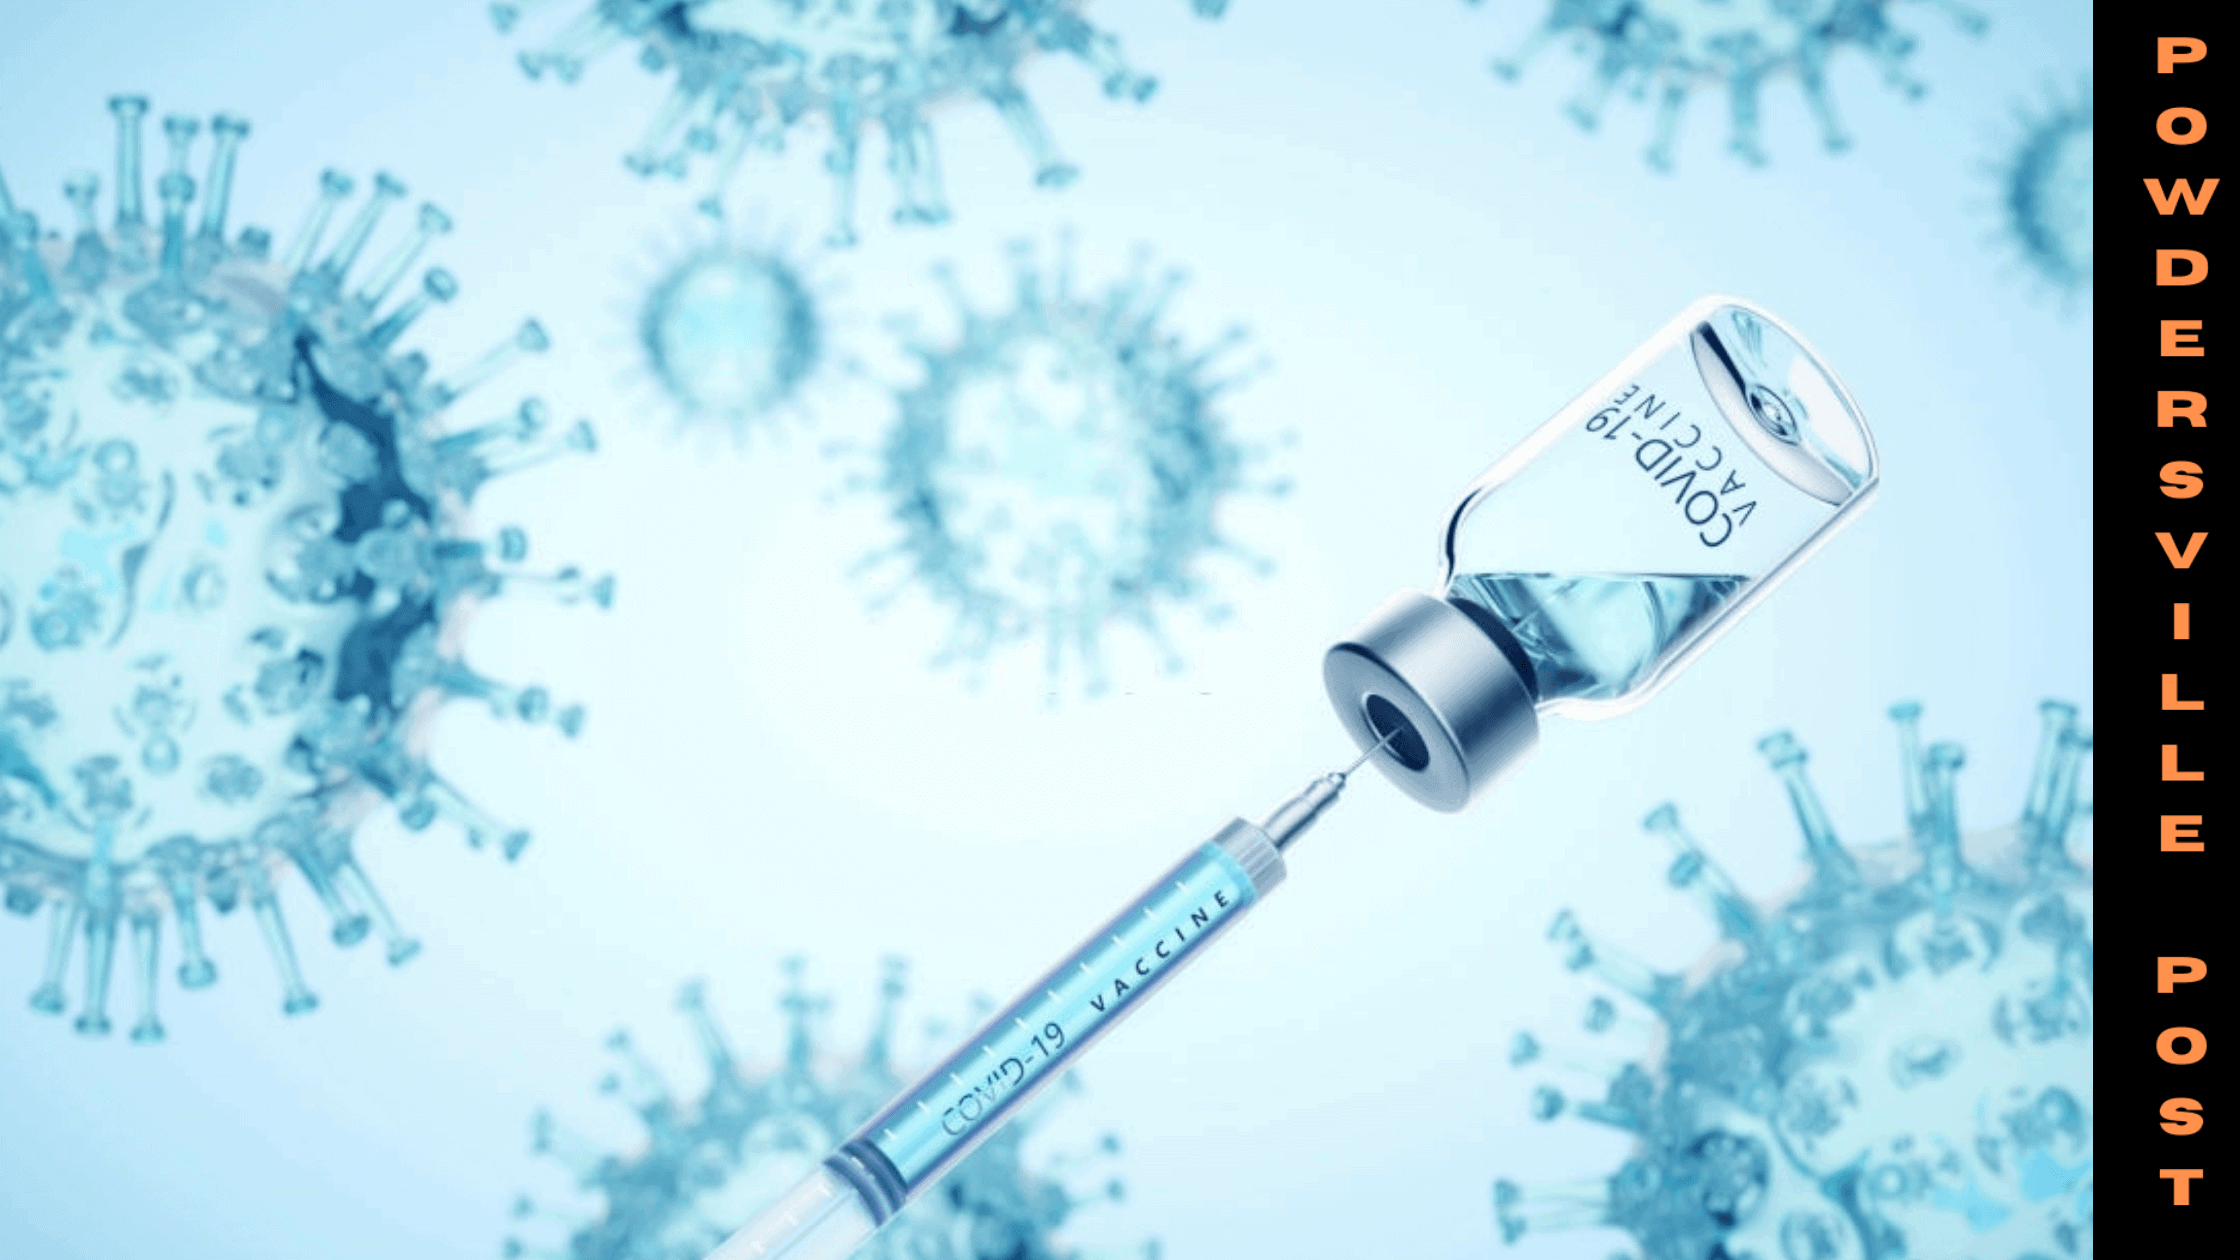 FDA Stops Authorization Of Under Five Covid Vaccines